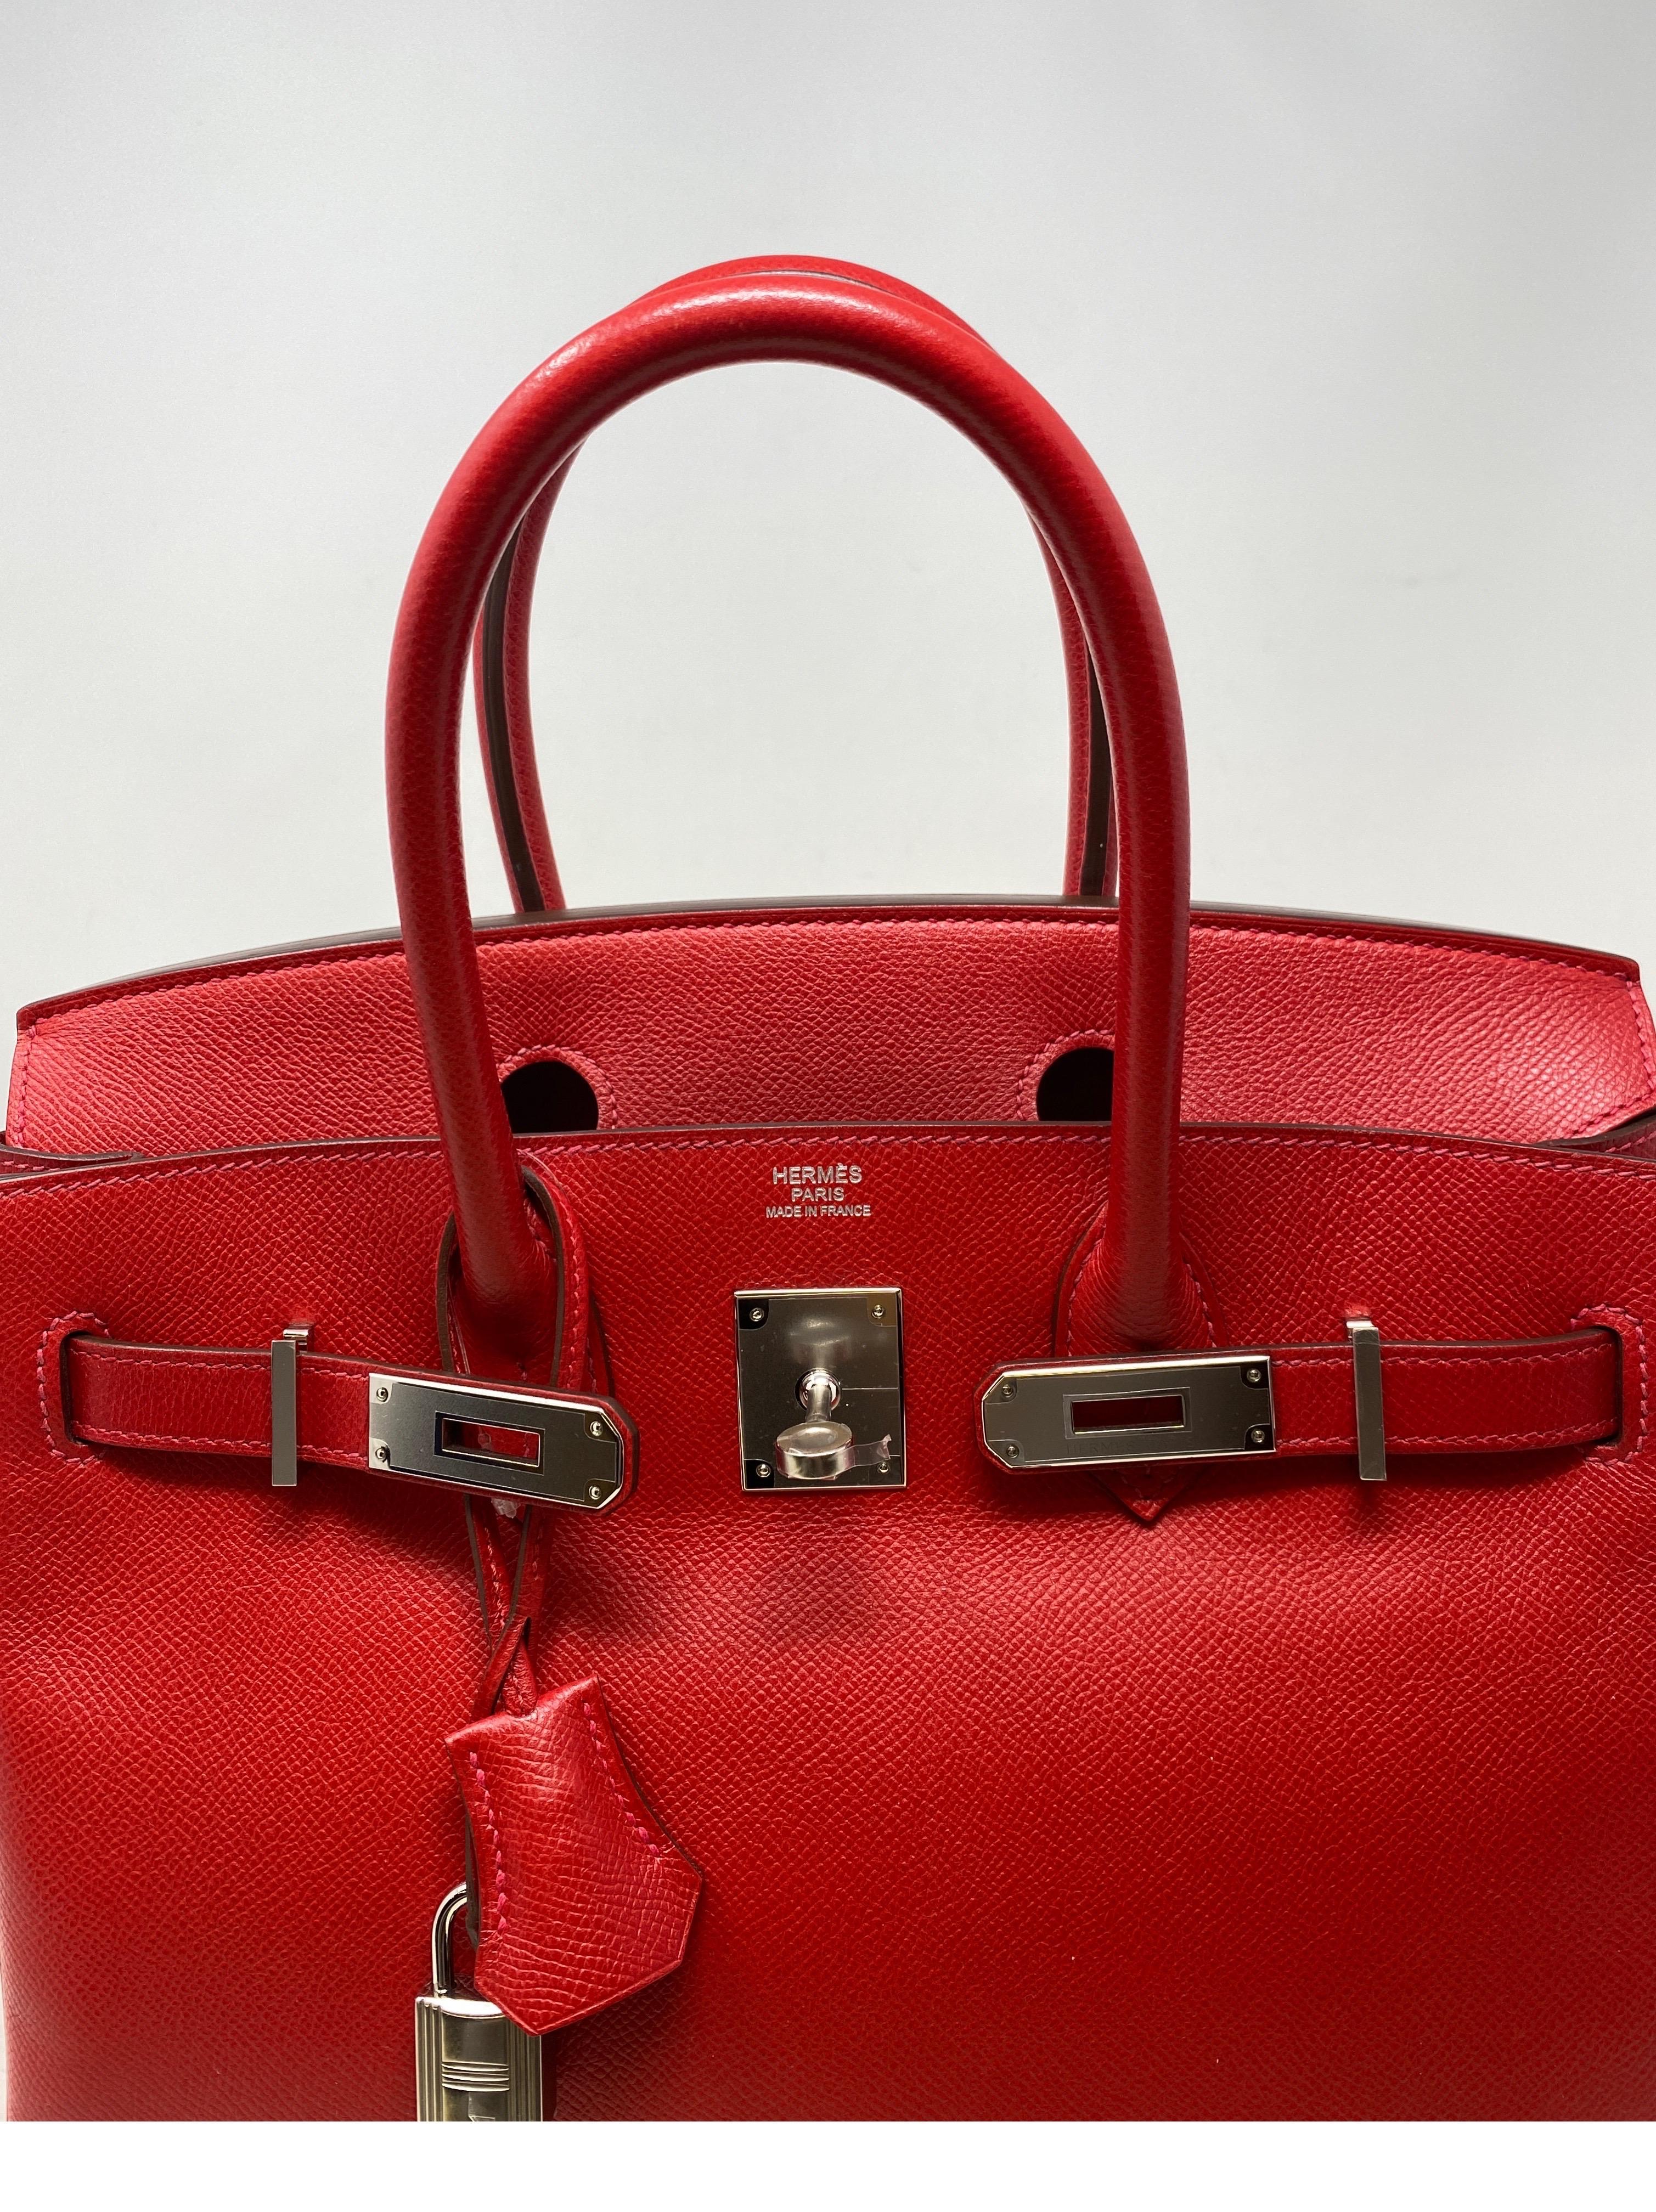 Hermes Birkin 30 Red Bag  9